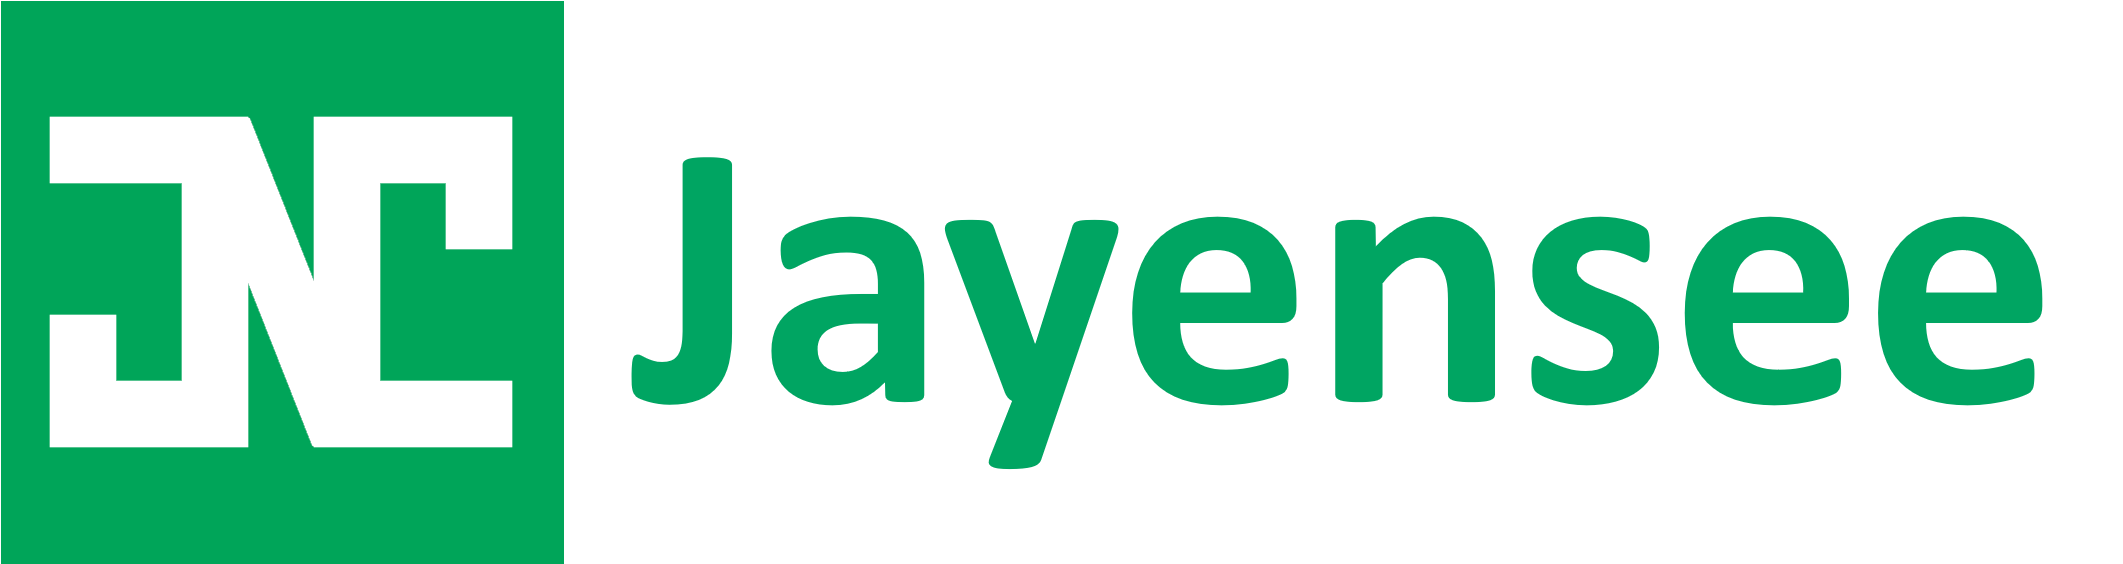 Jayensee Logo